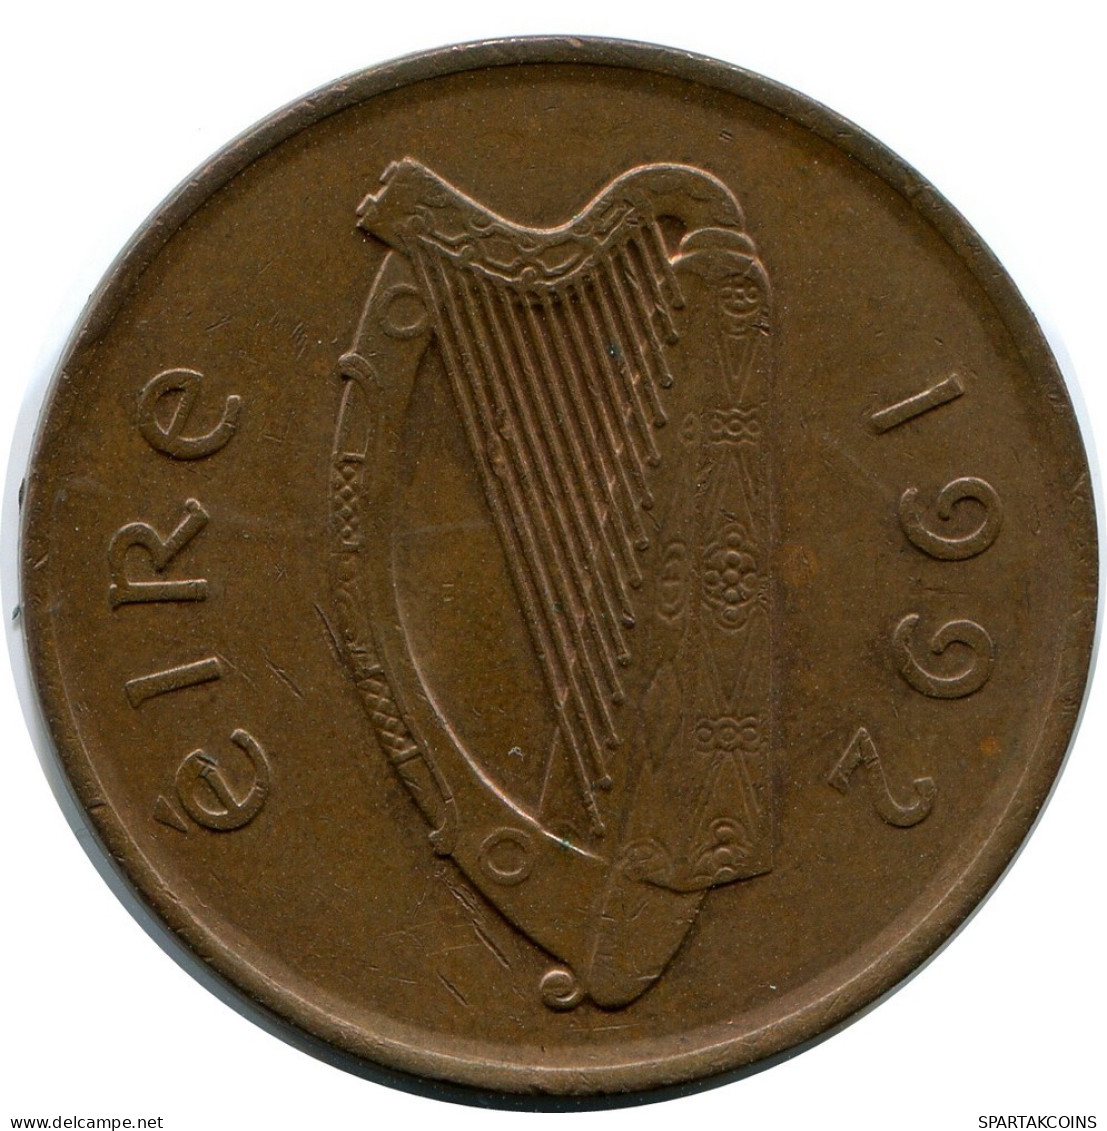 2 PENNY 1992 IRELAND Coin #AR916.U.A - Ireland